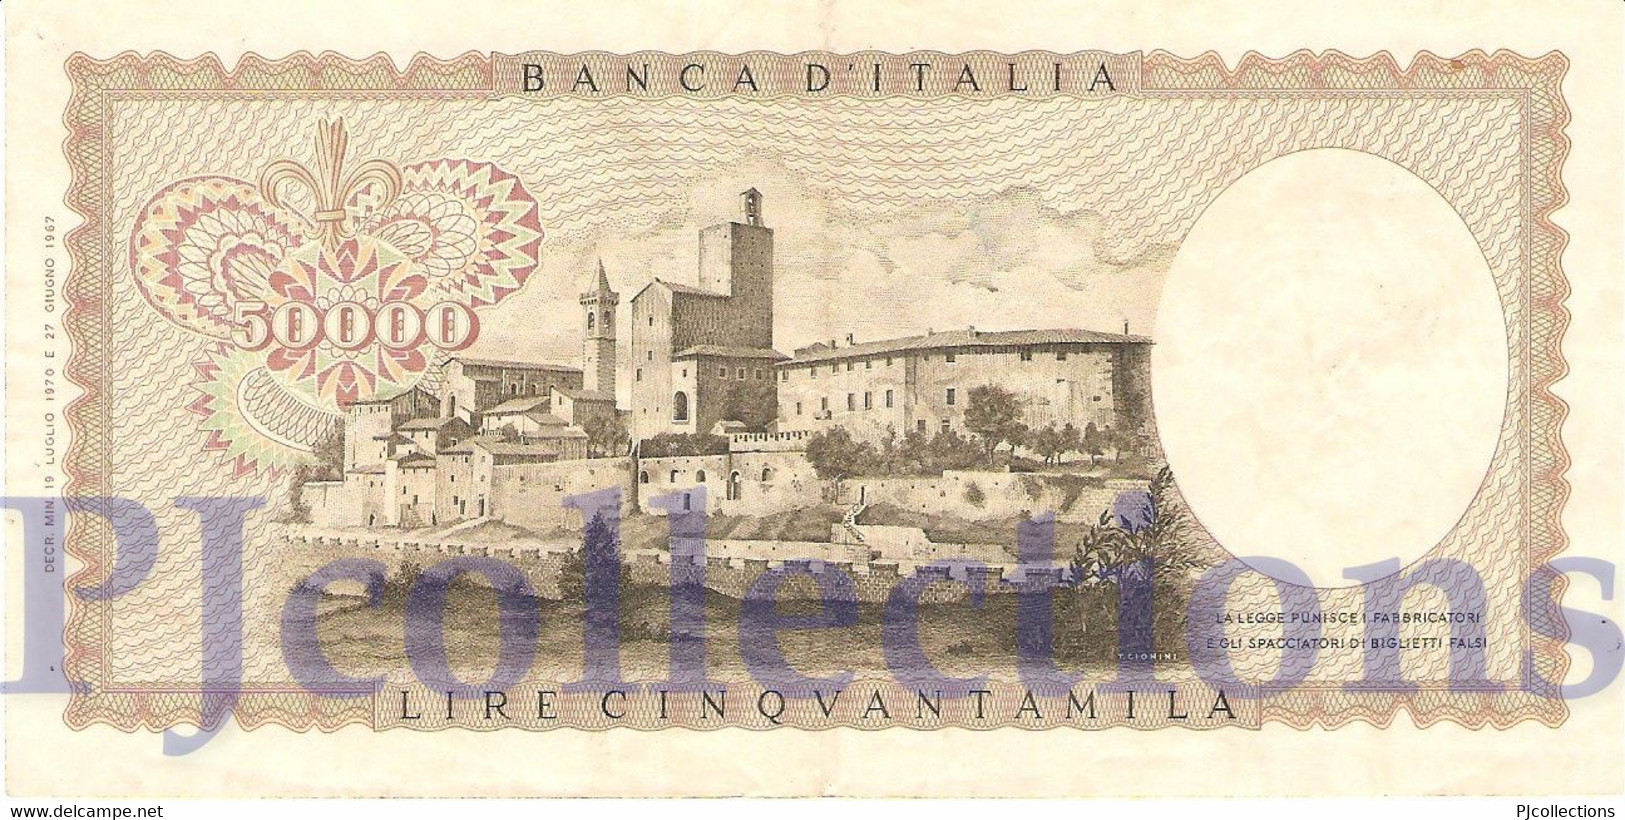 ITALY 50000 LIRE 1970 PICK 99b VF+ - 50000 Liras